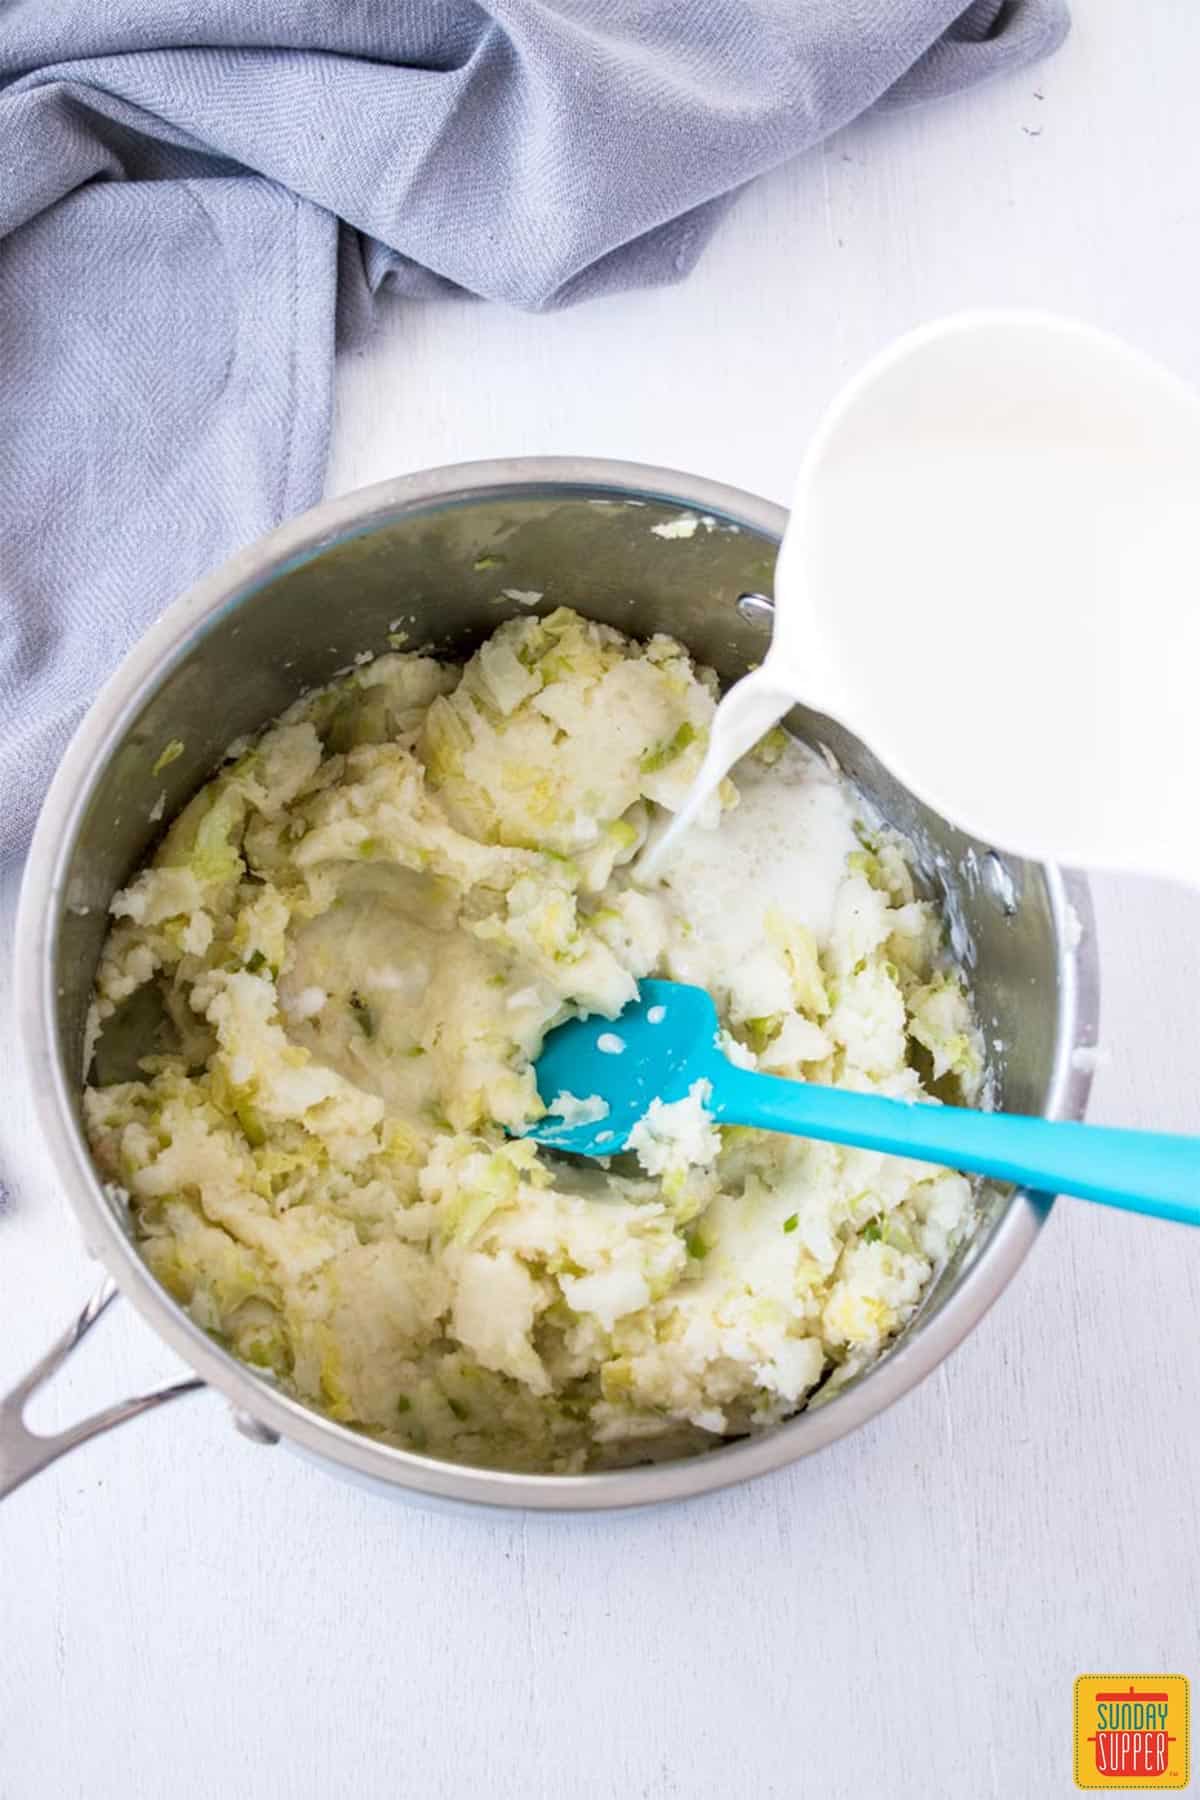 Adding milk to potatoes